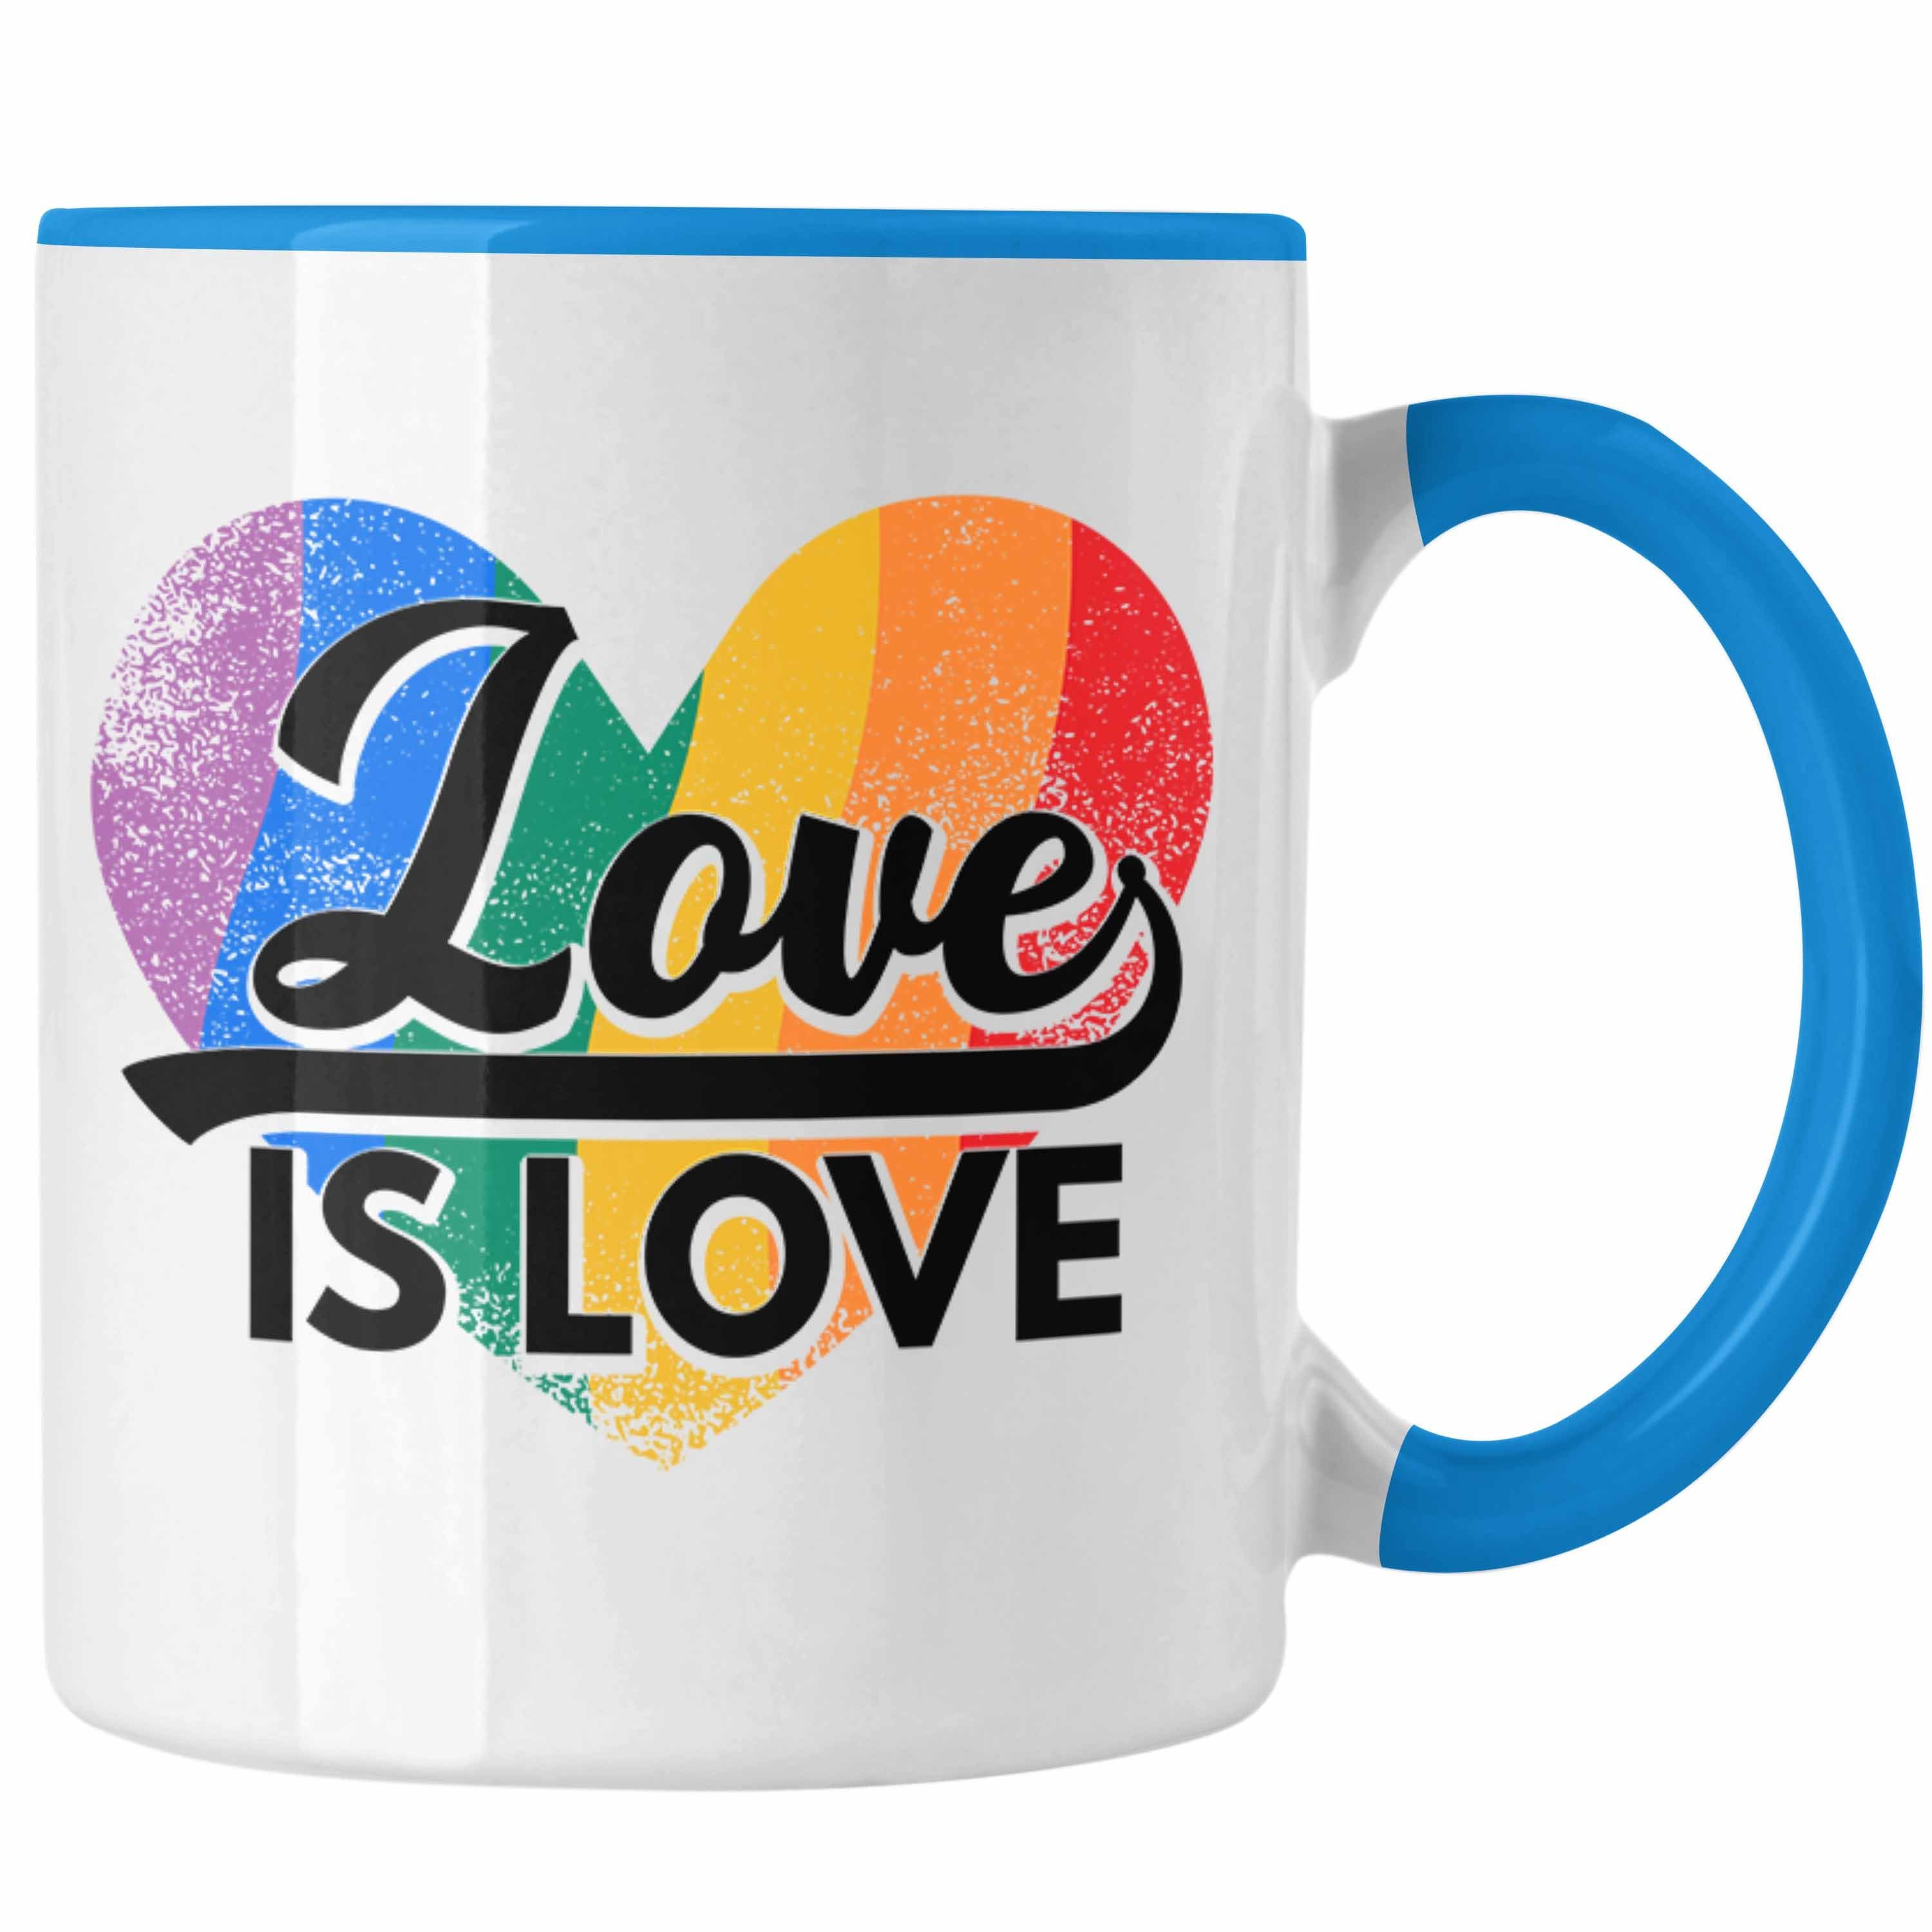 Trendation Tasse Trendation - LGBT Tasse Geschenk für Schwule Lesben Transgender Regenbogen Lustige Grafik Regenbogen Love Is Love Blau